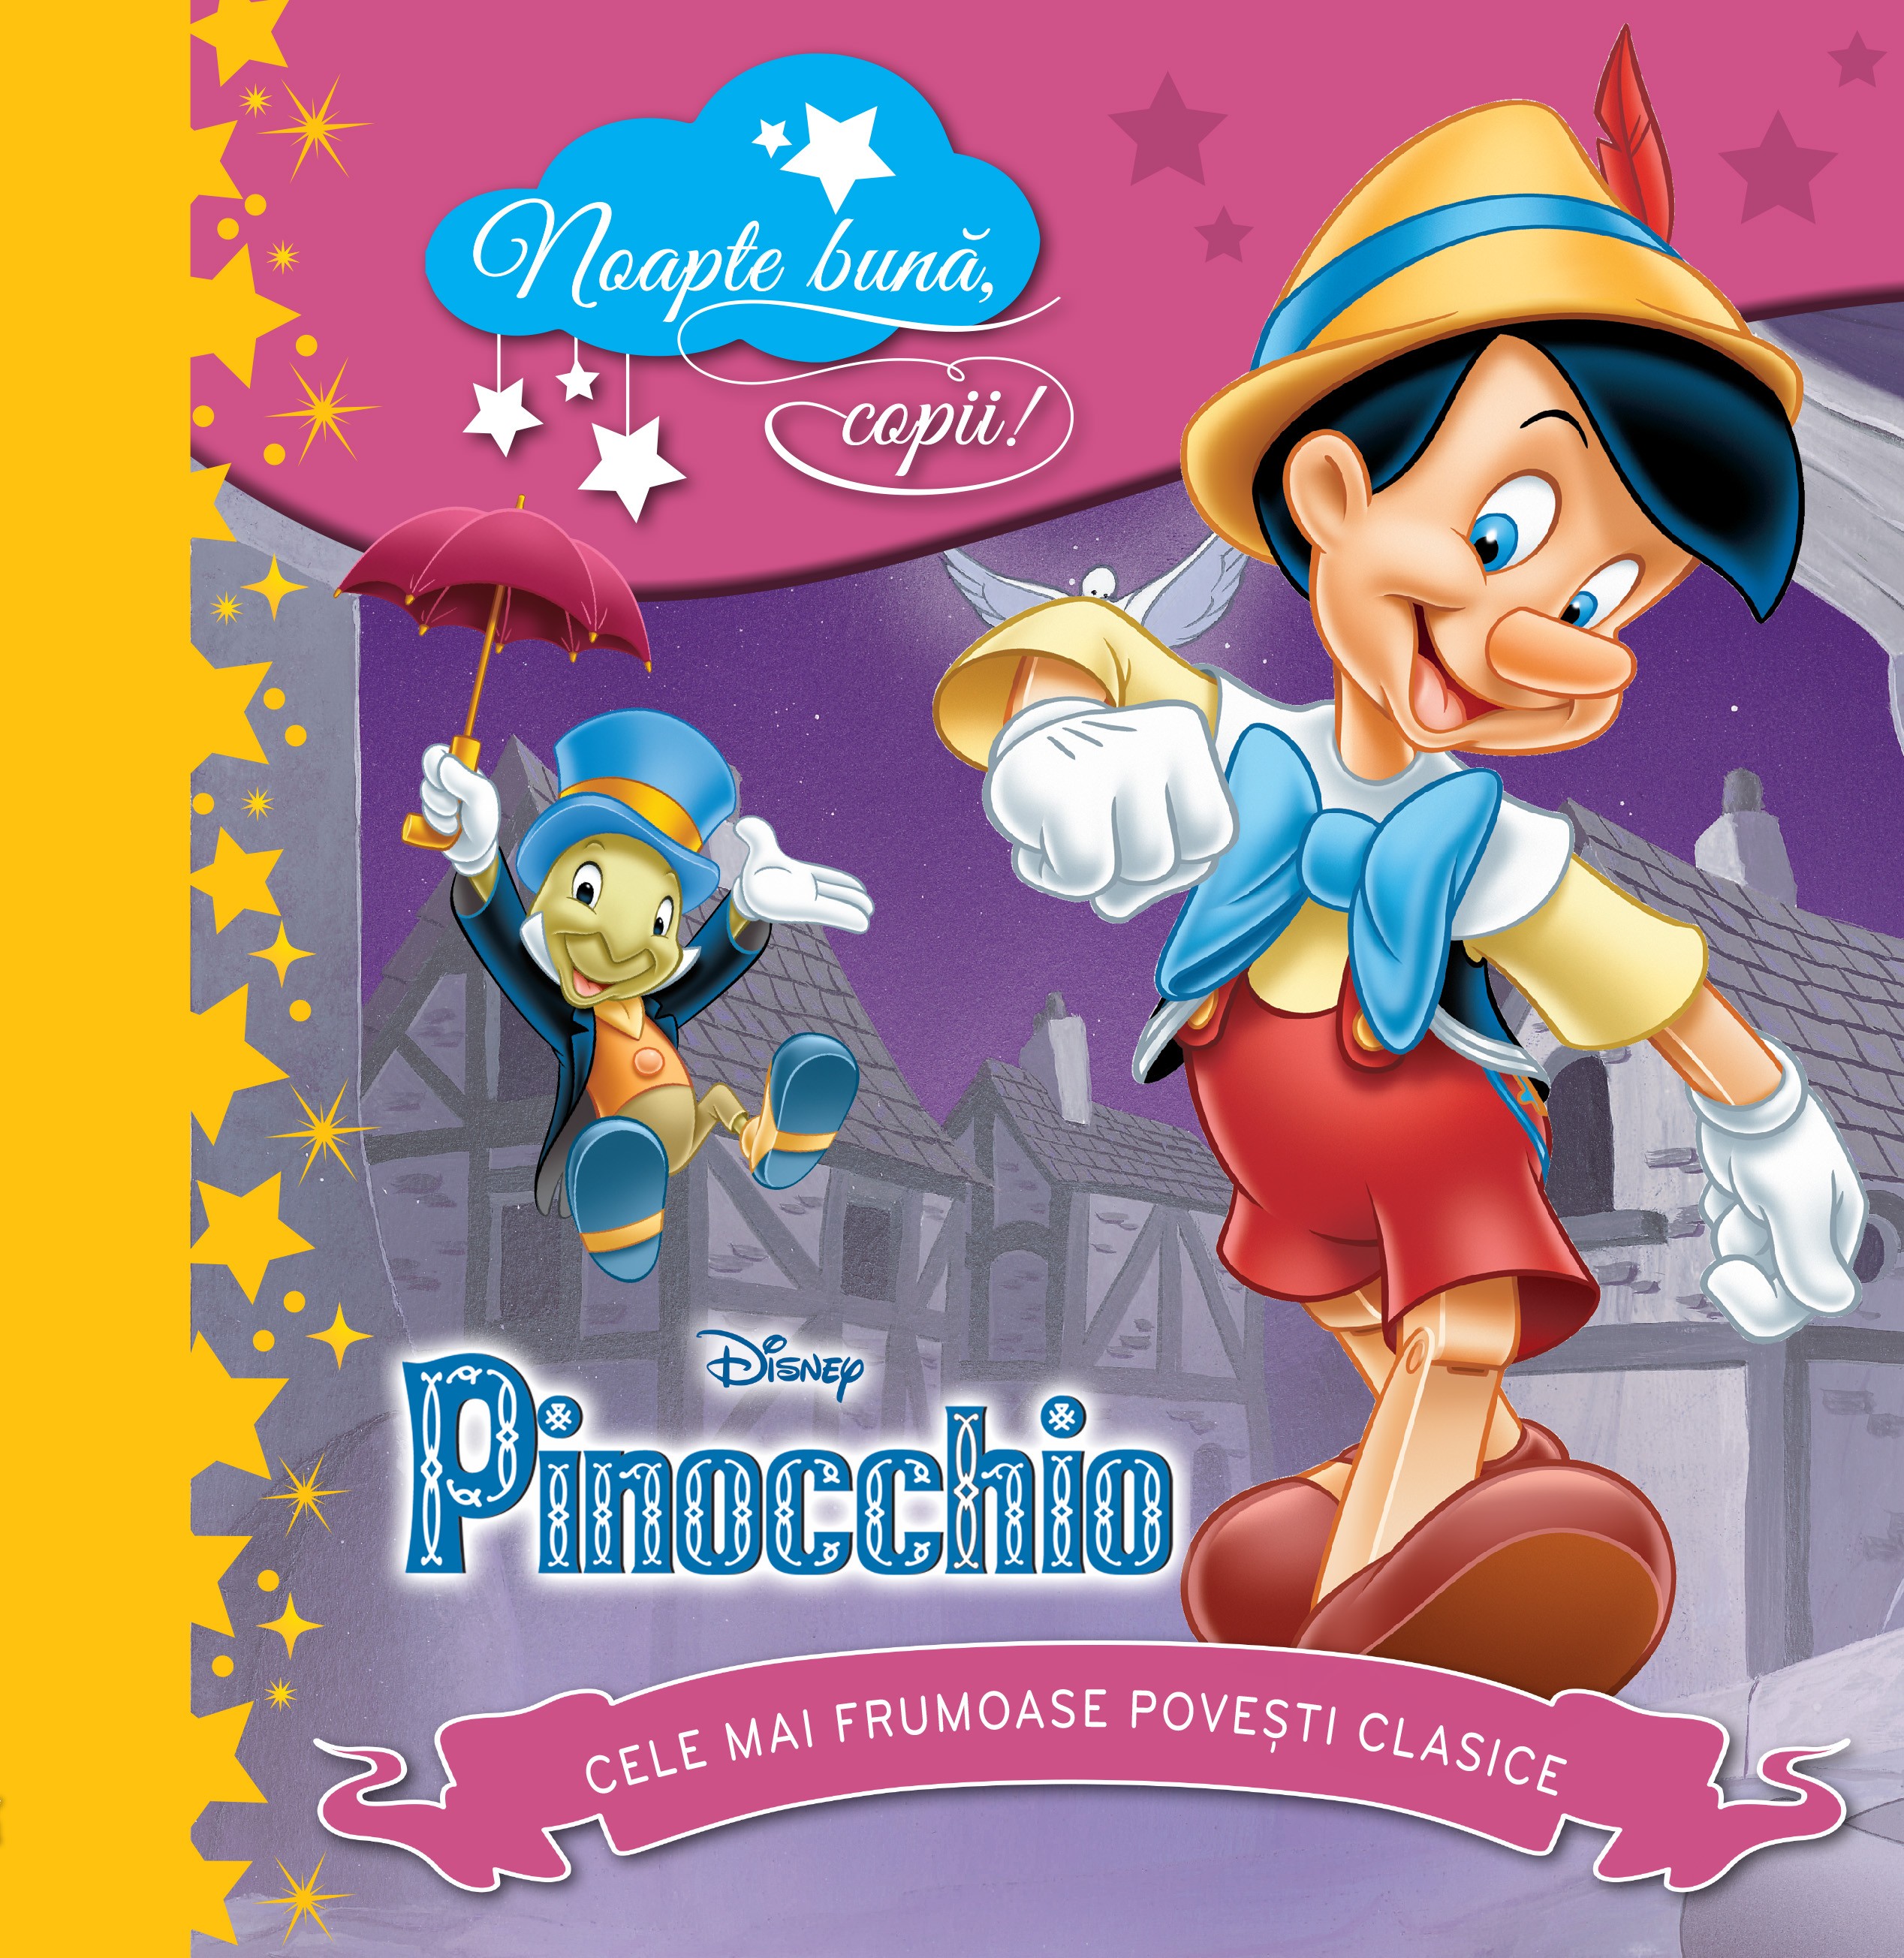 Disney - Pinocchio - Noapte buna, copii!